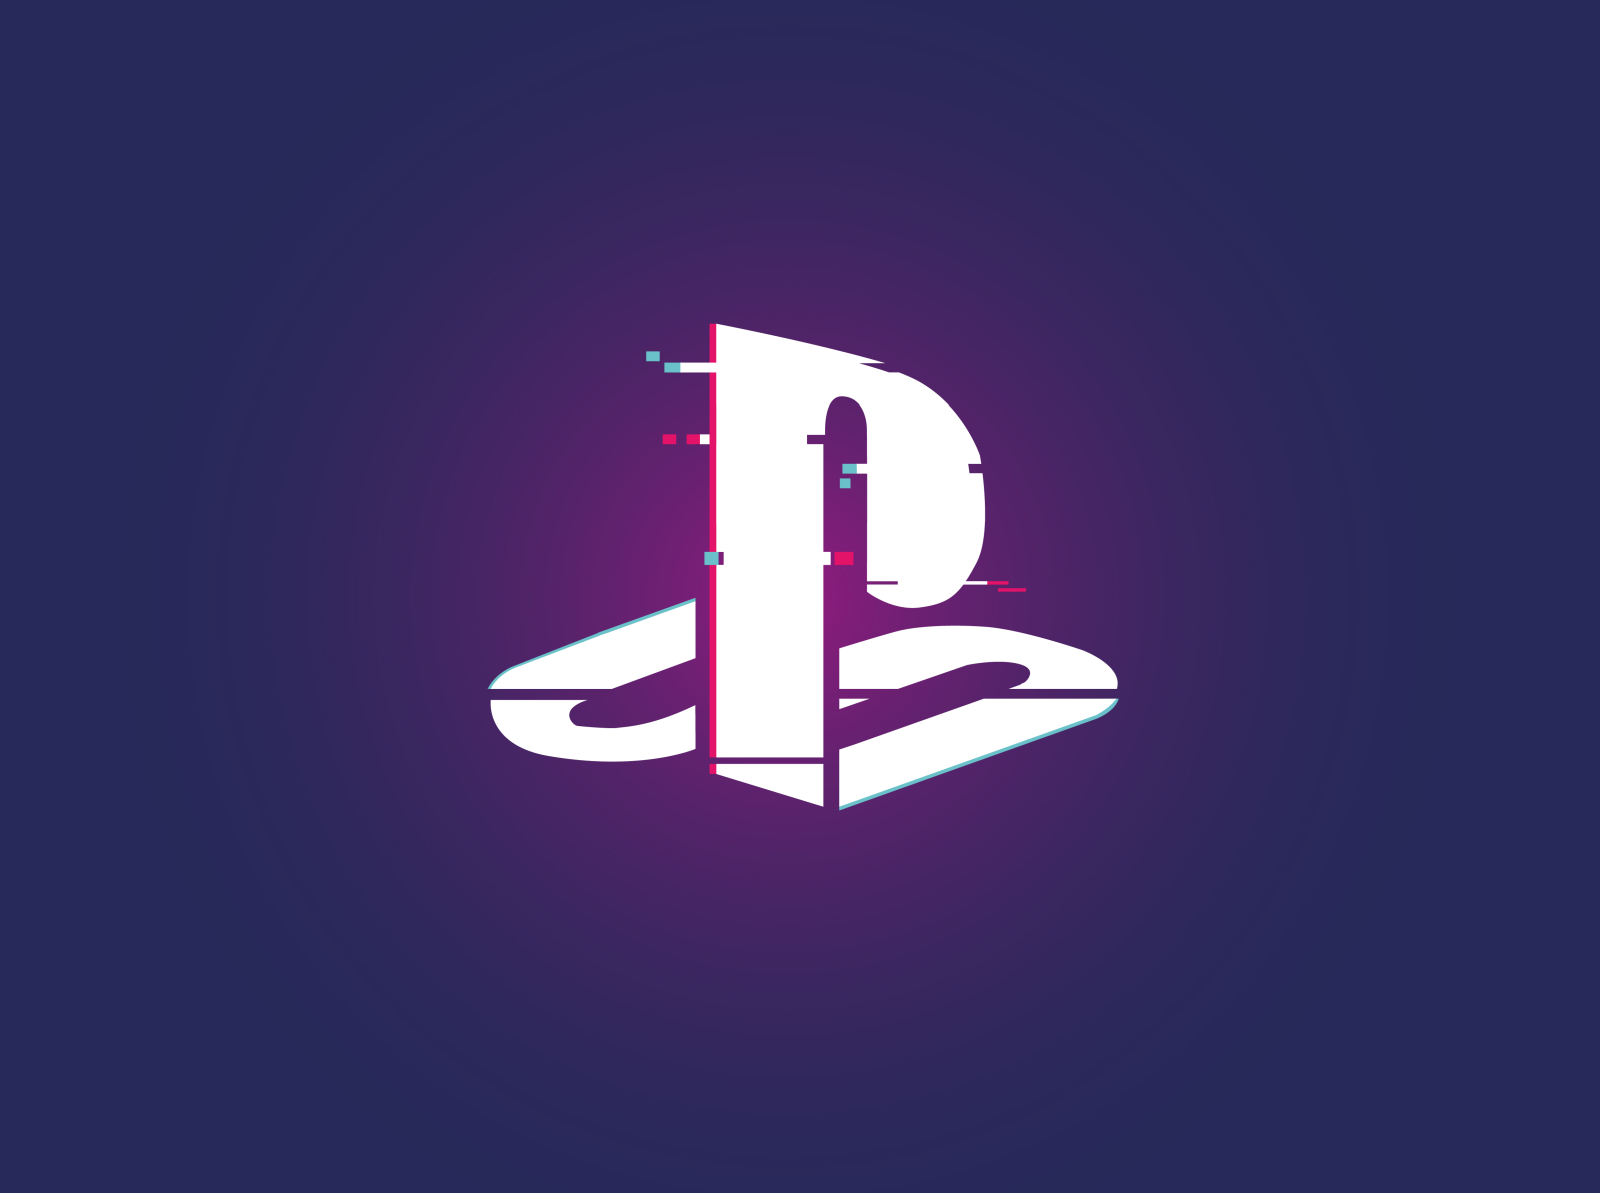 PlayStation logo design by Piotr Rozalski on Dribbble